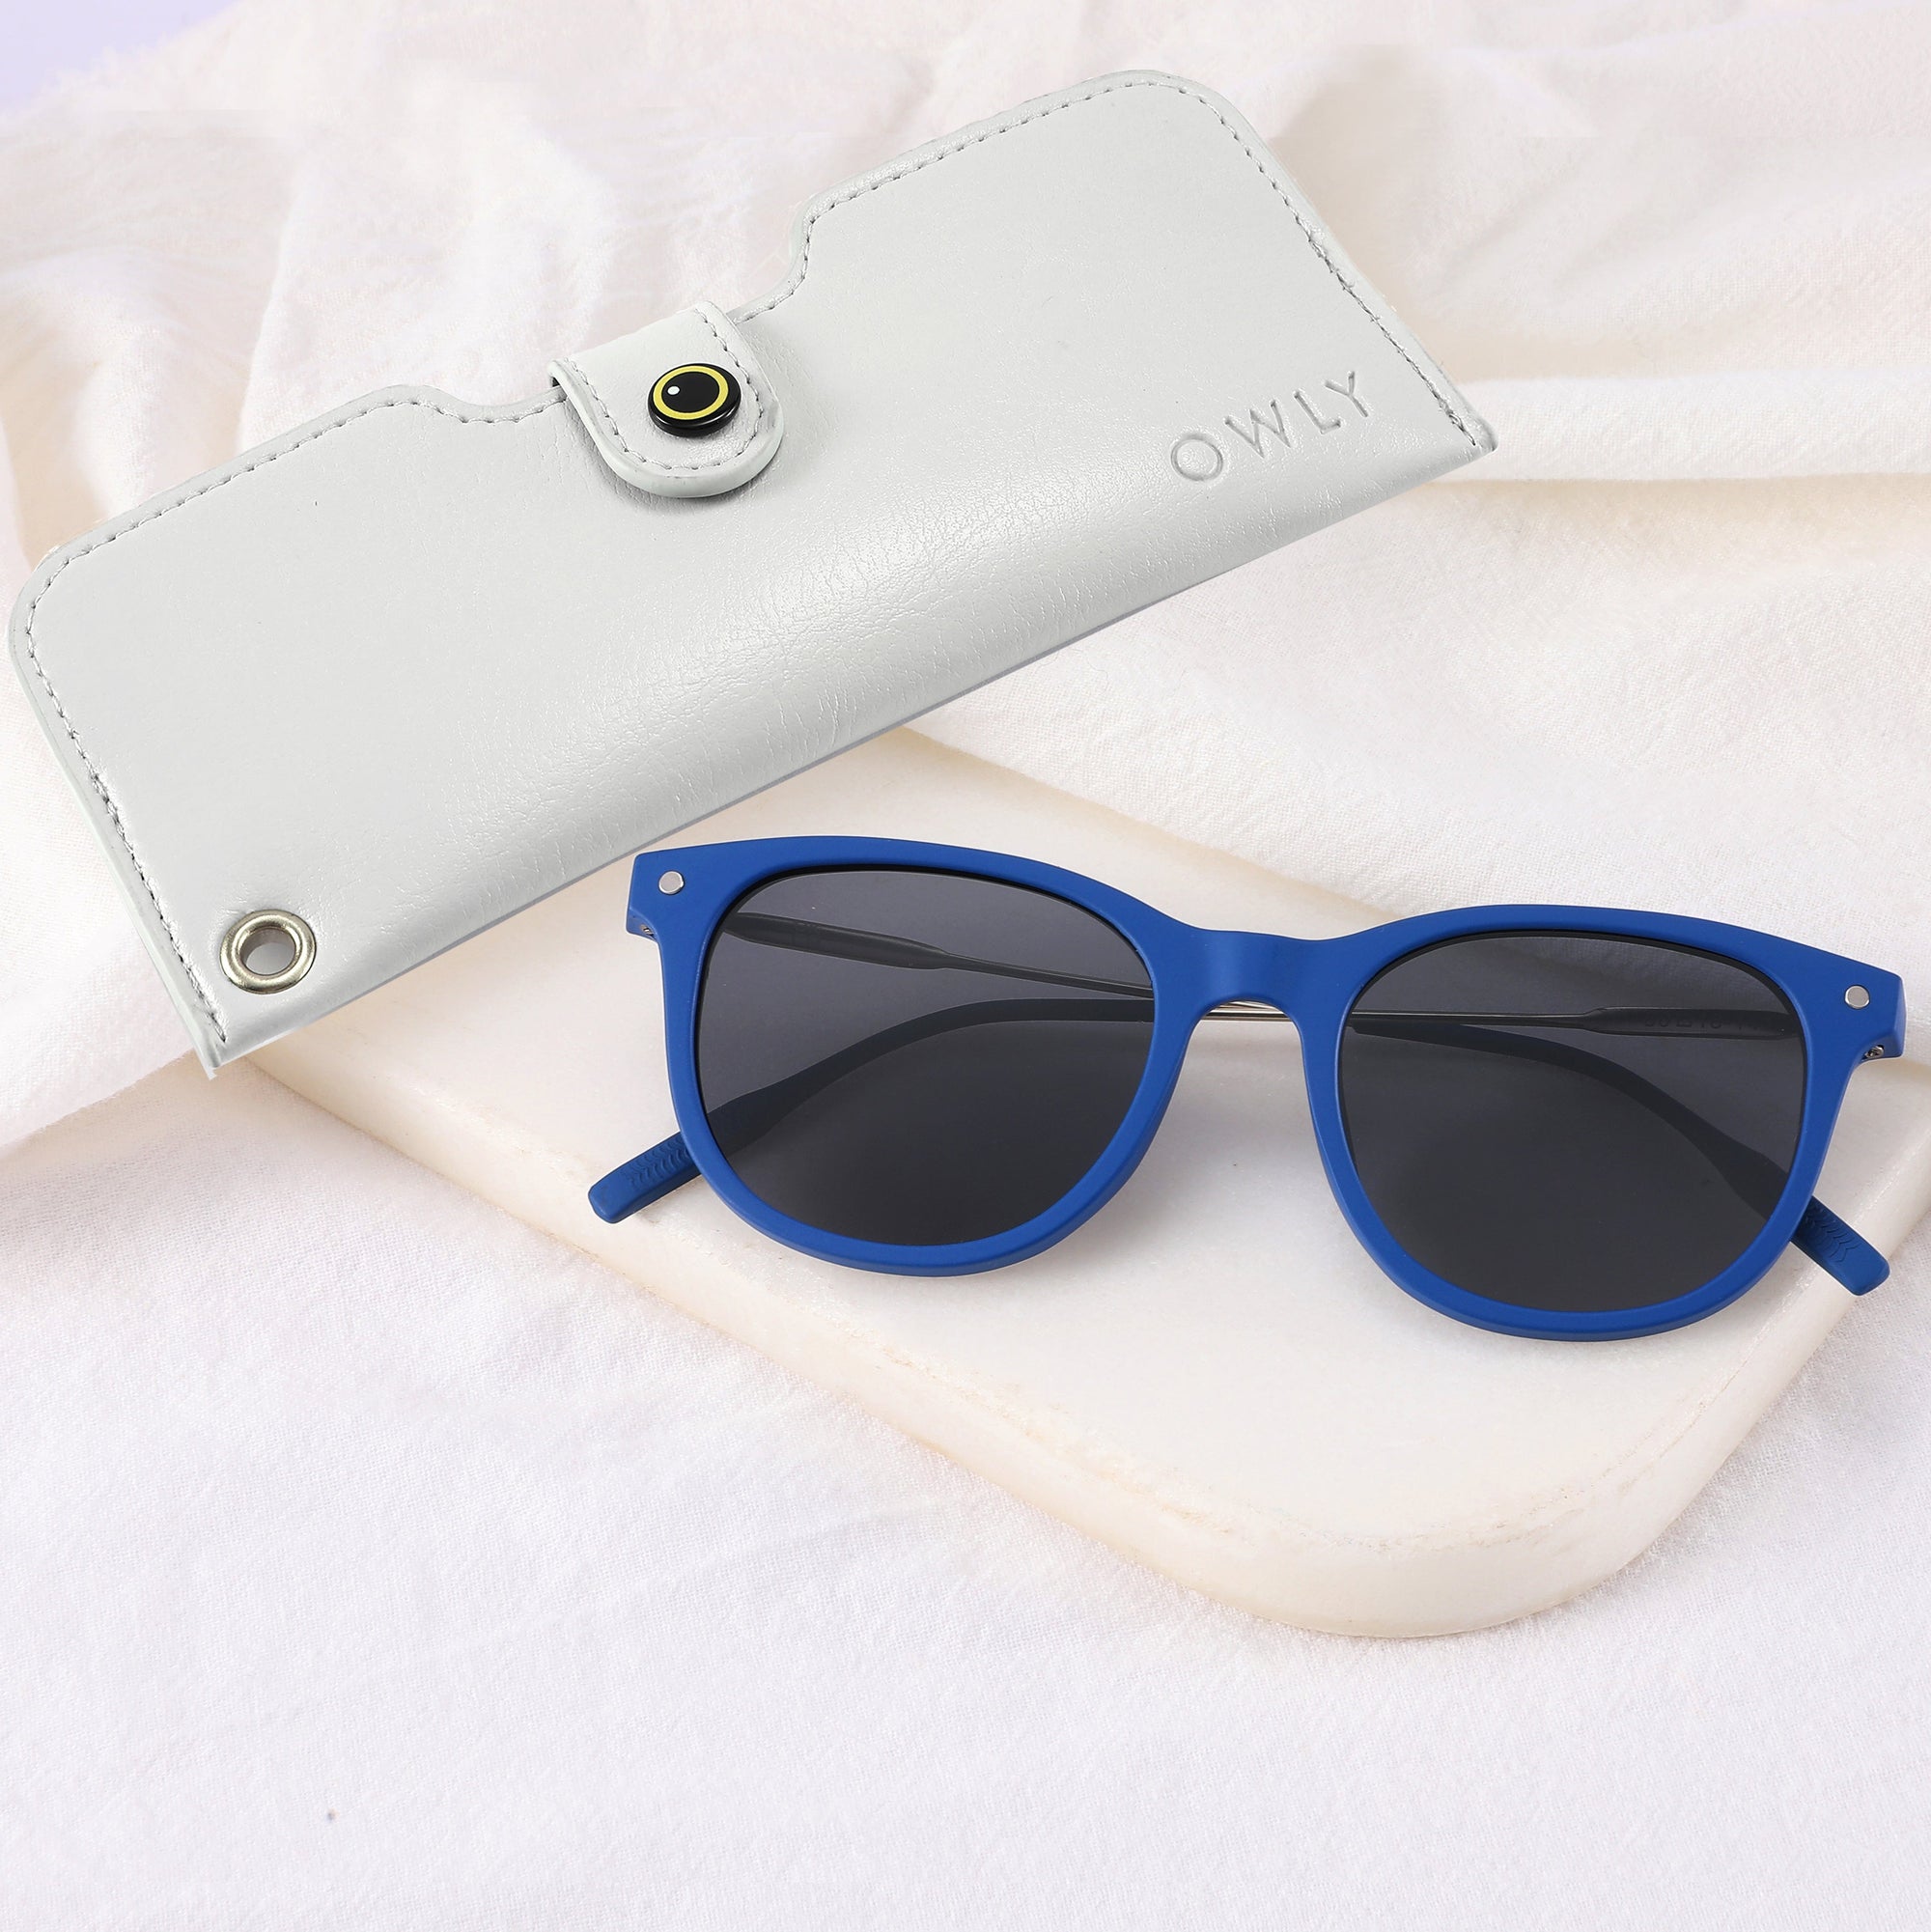 Owly™ Ultra Thin Light Pocket Reading Sunglasses *LIFETIME GUARANTEE*